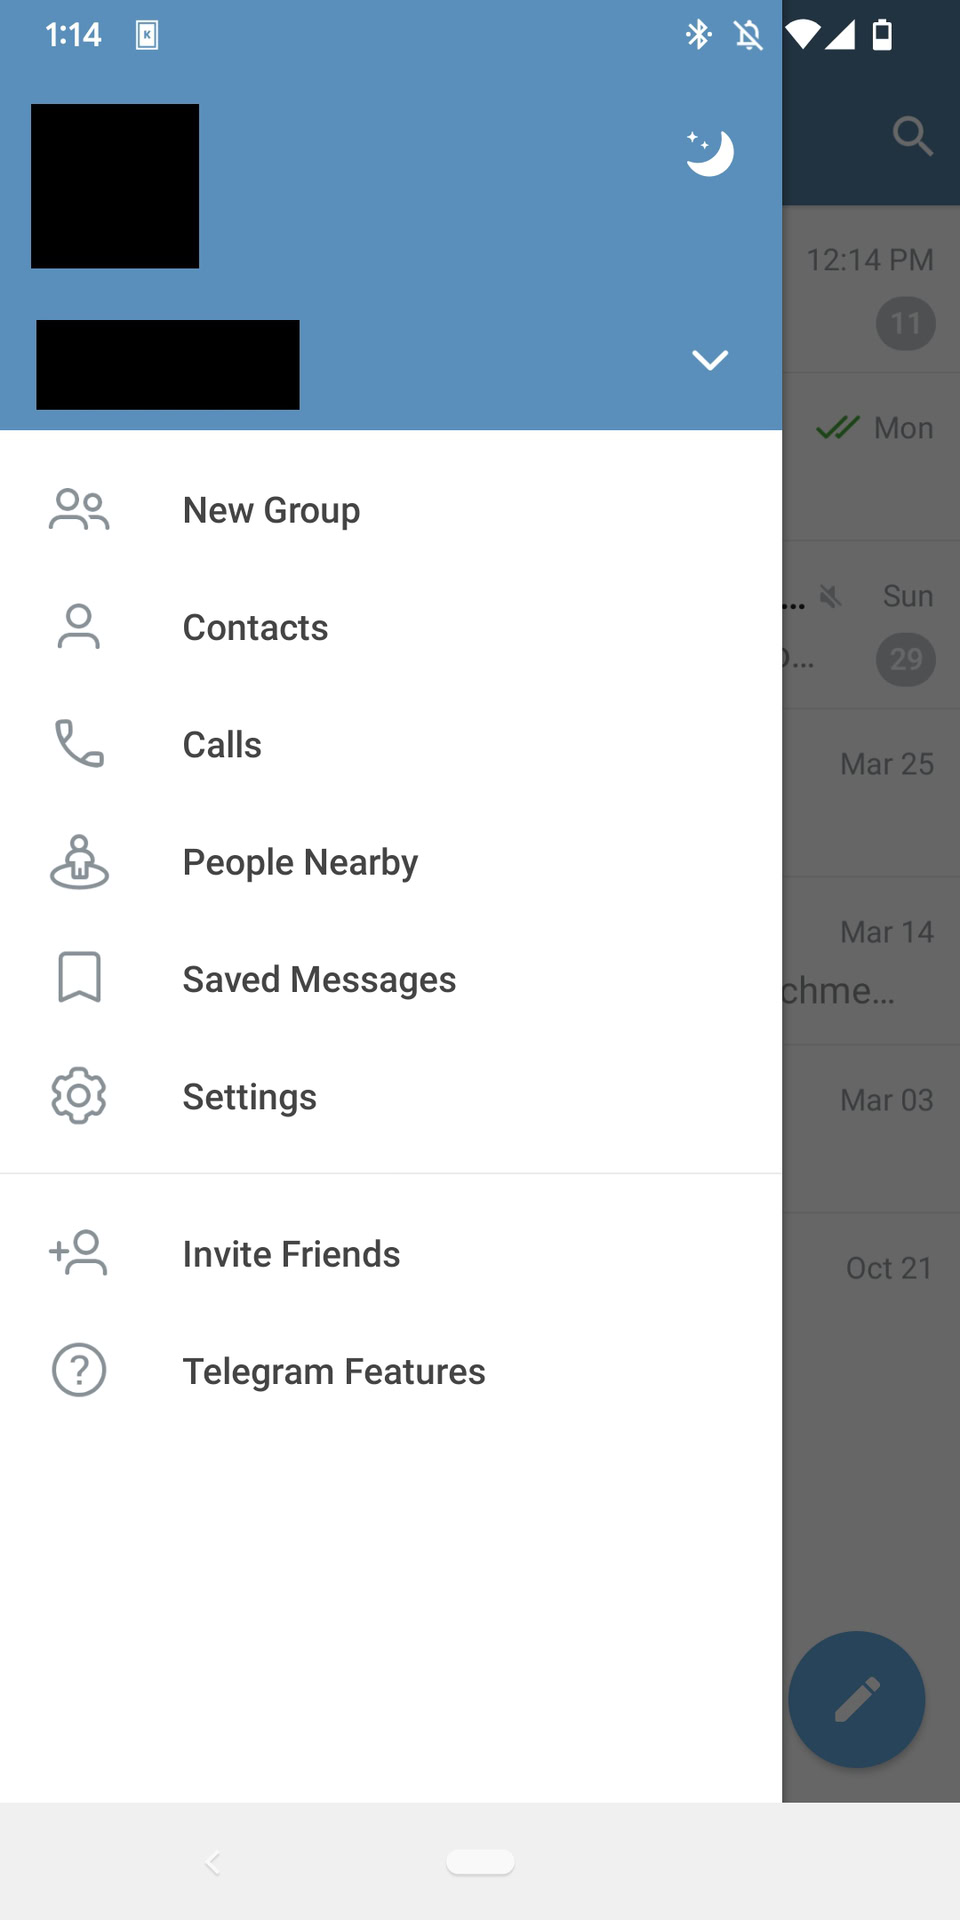 The Telegram settings menu open inside the mobile app.